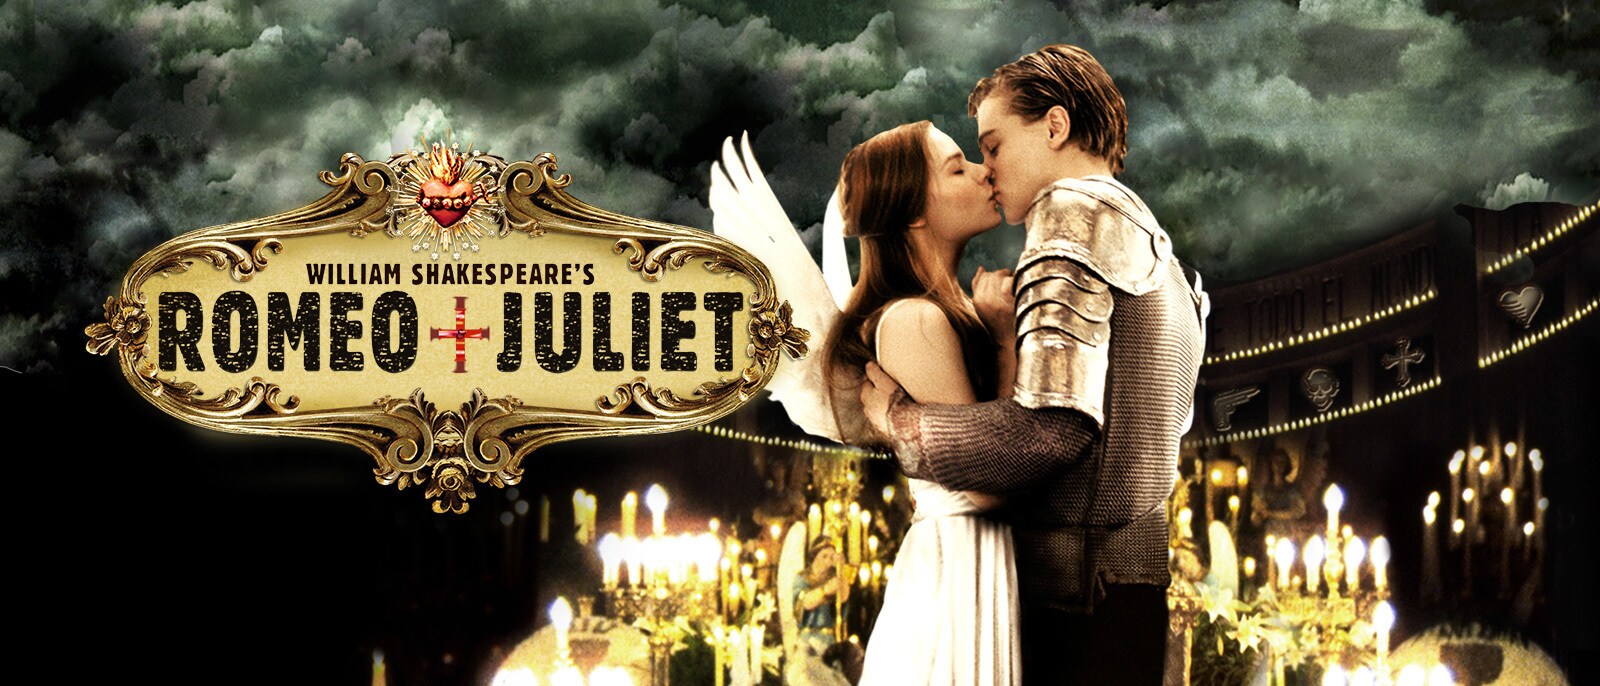 William Shakespeare's Romeo + Juliet 20th Century Studios Australia